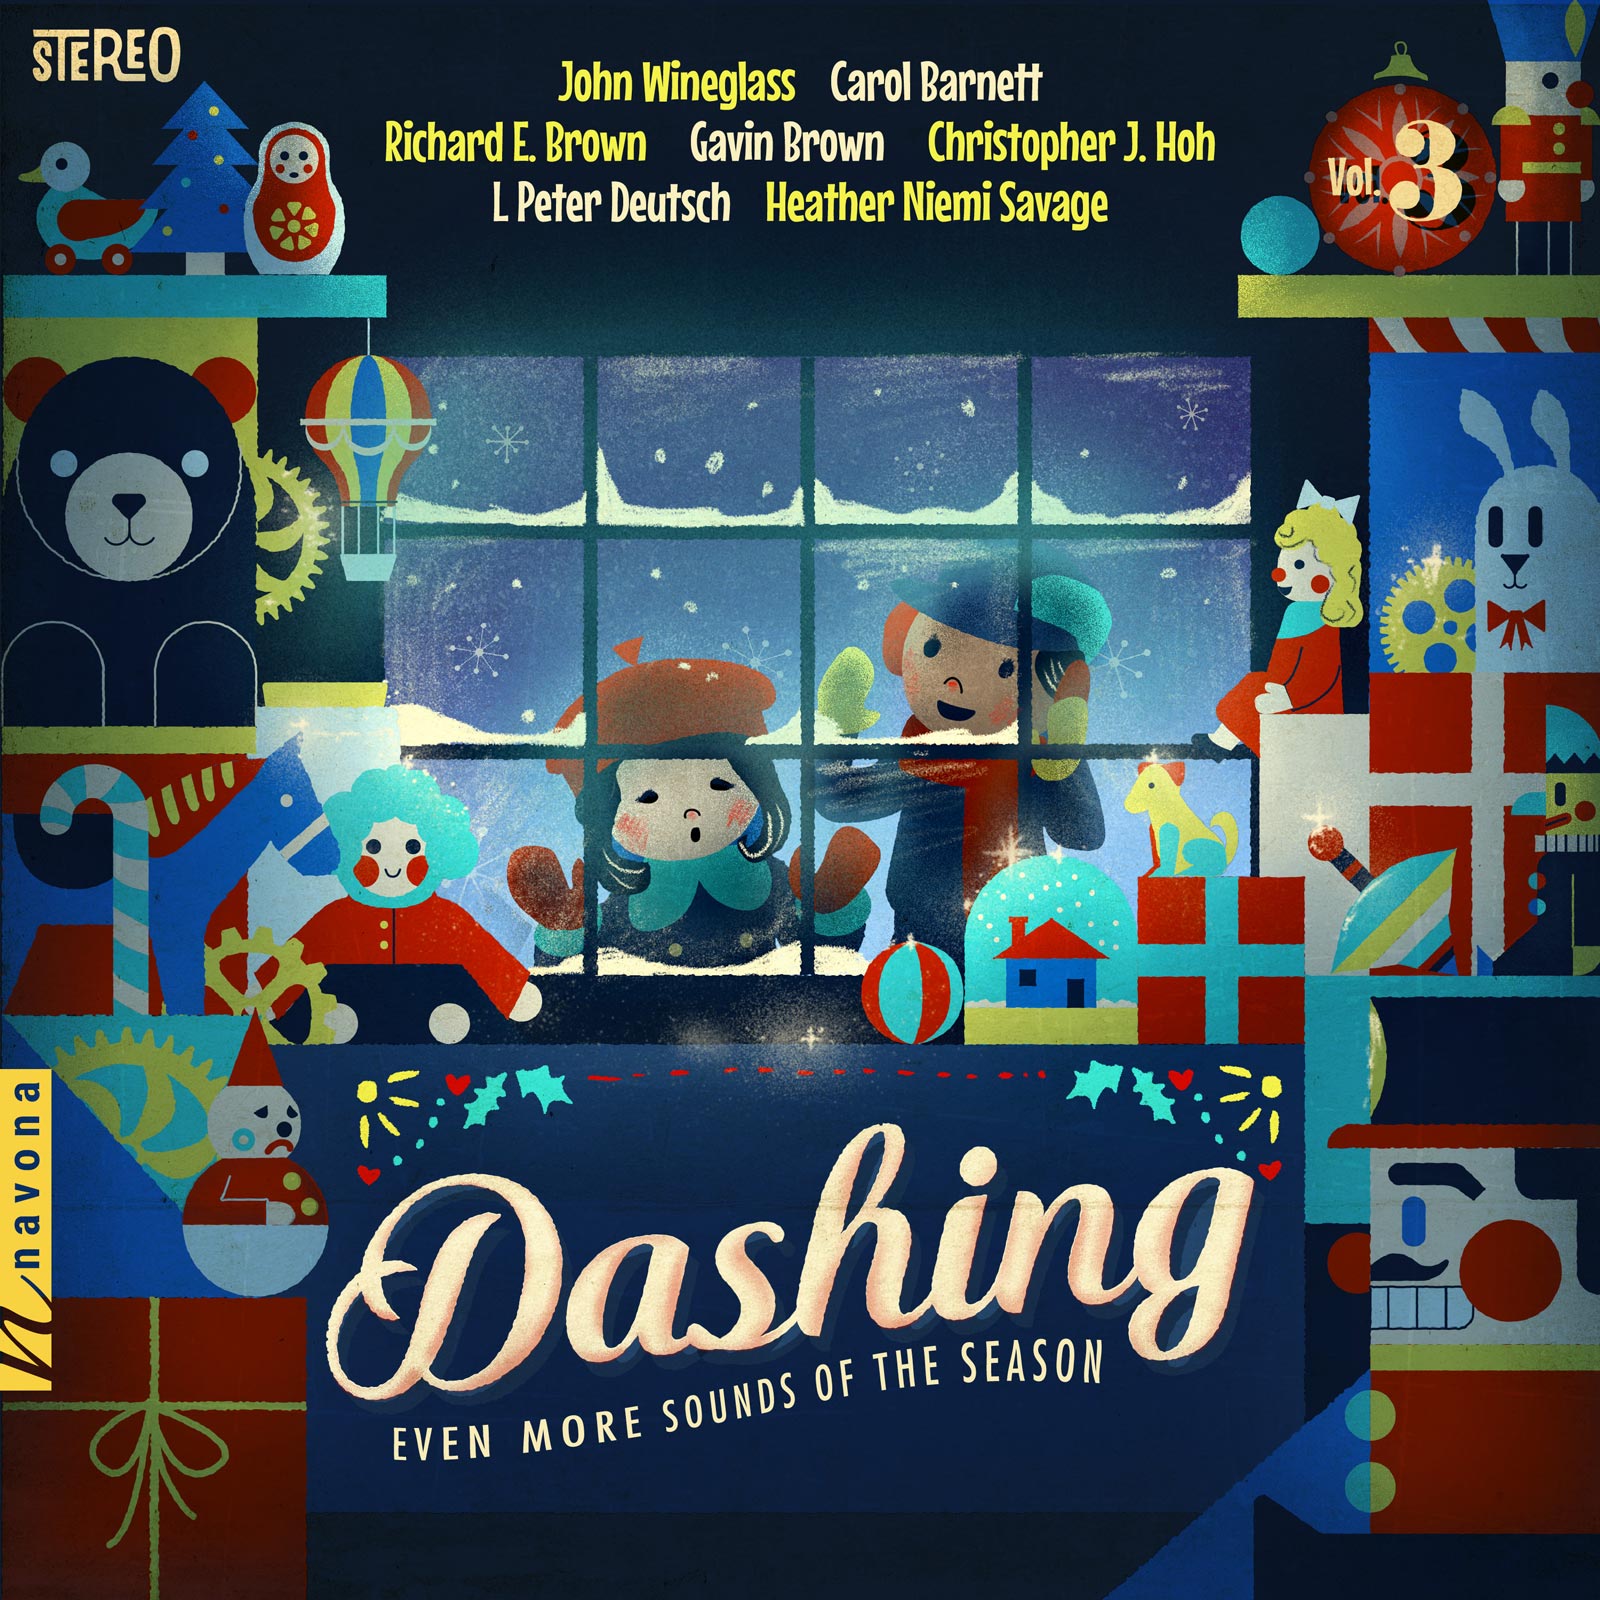 Dashing, Vol. 3 CD Cover